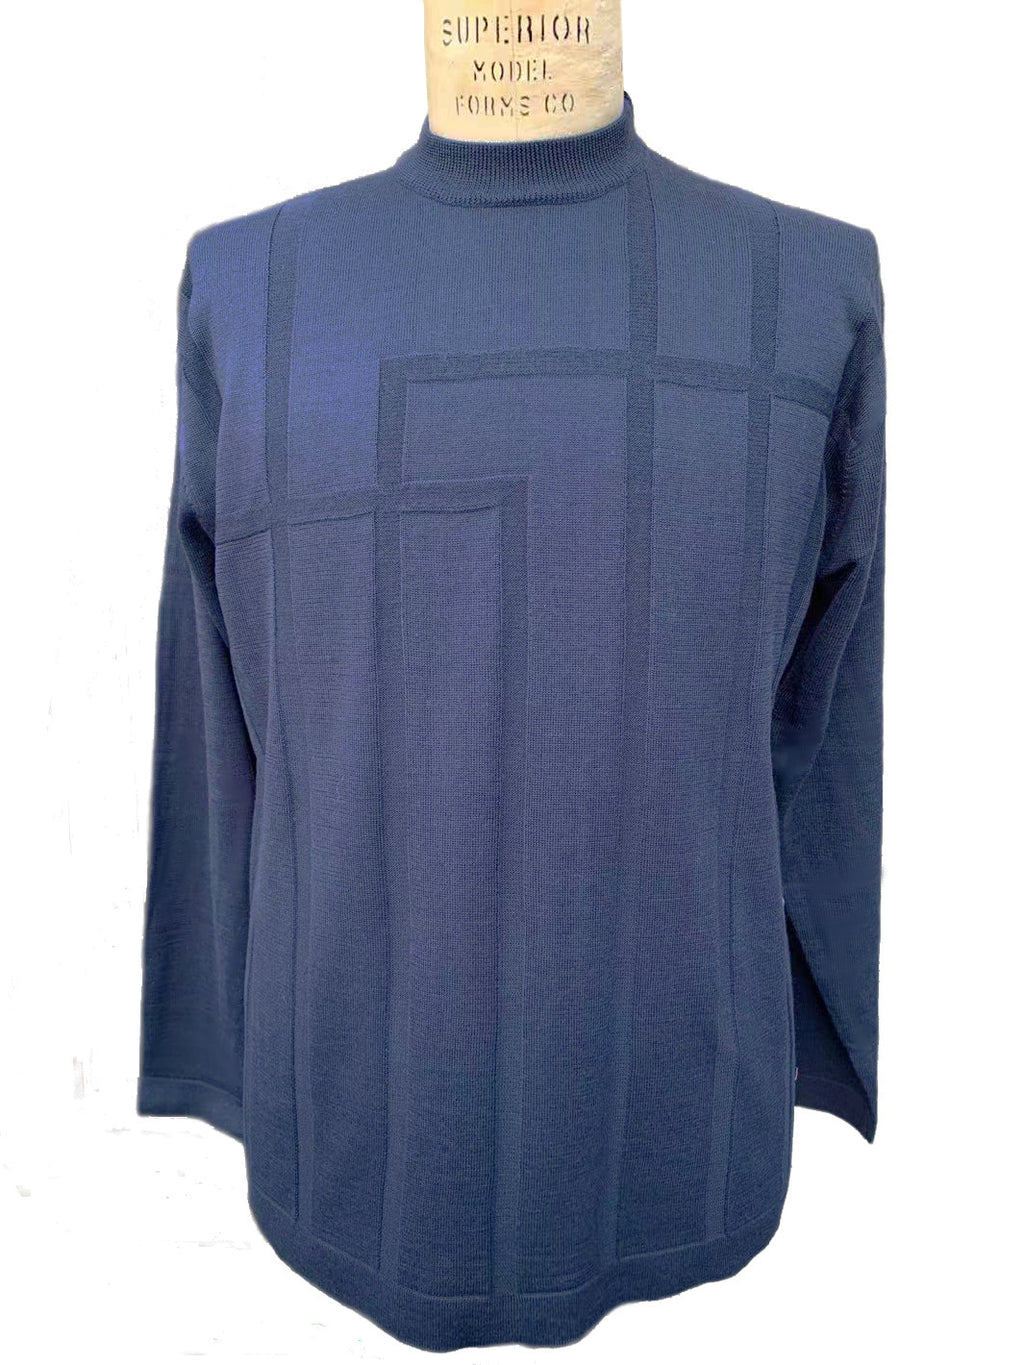 Grid Sect Thermal Long Sleeve Shirt - Navy